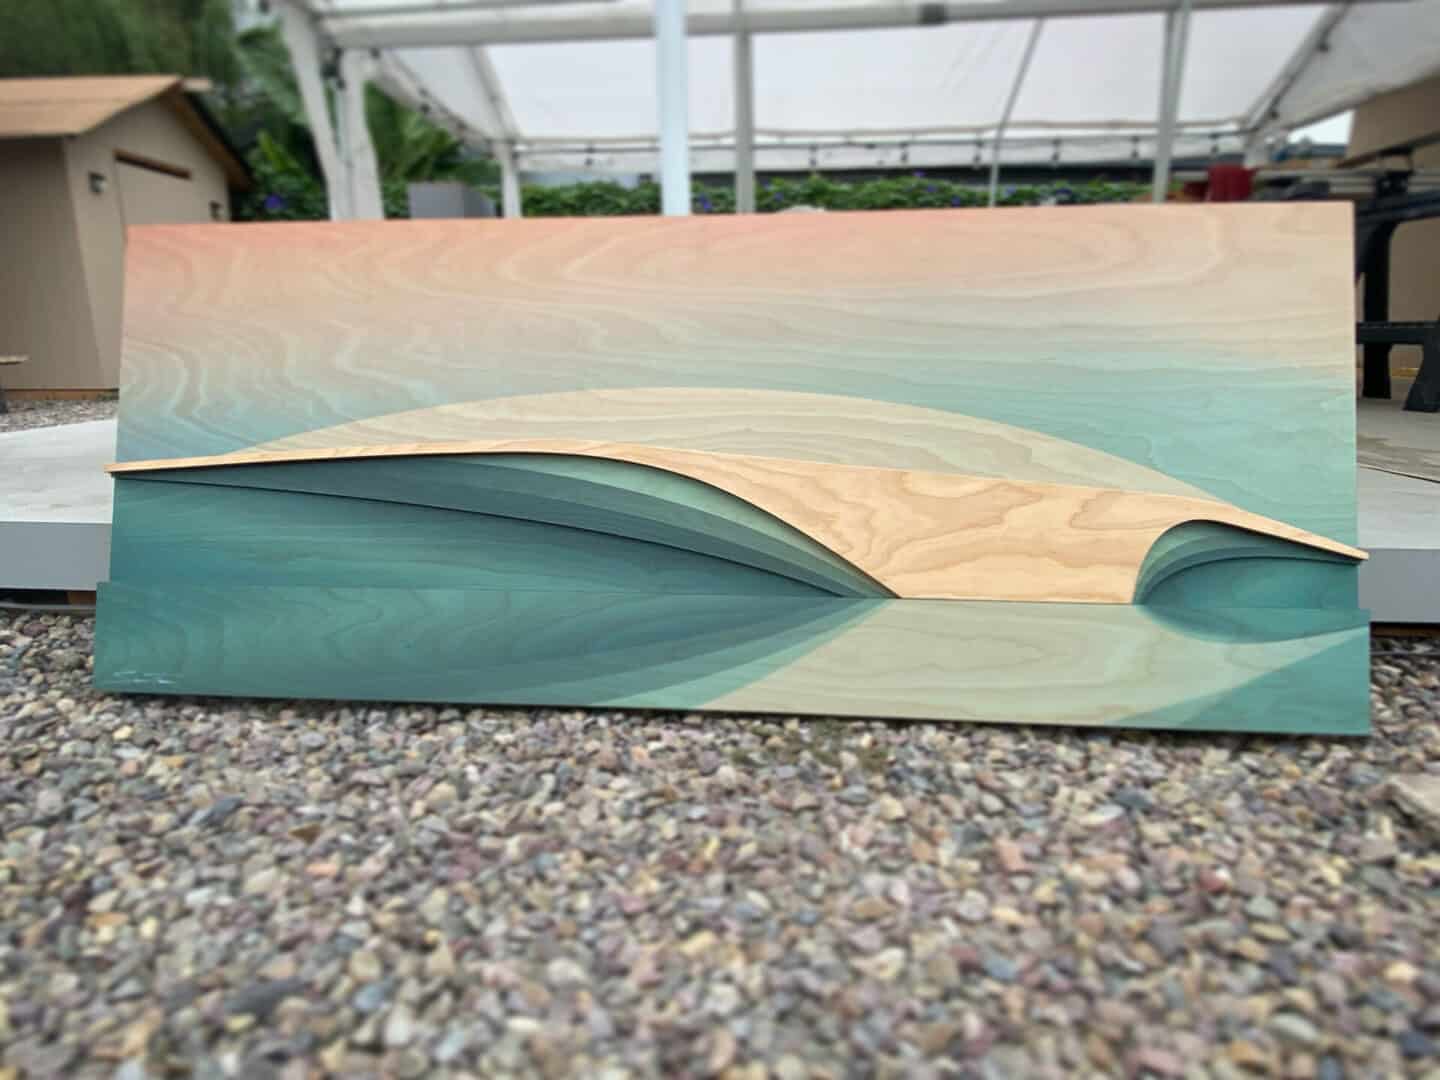 wave art sculpture, surf art, 3d wave sculpture, carving waves in wood